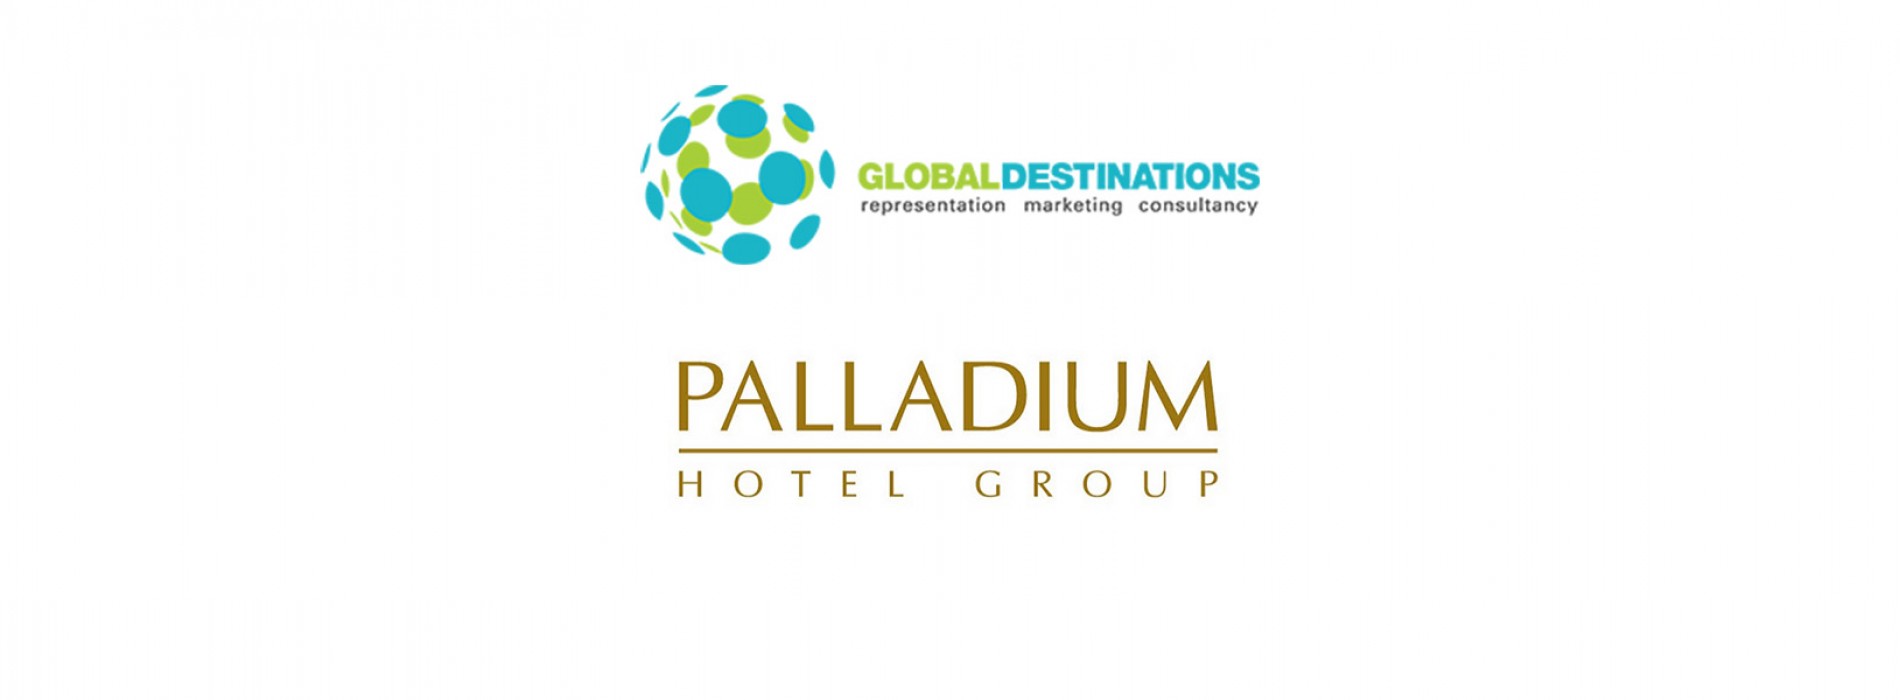 Palladium Hotel Group: A Rendezvous of Travel & Tapas!